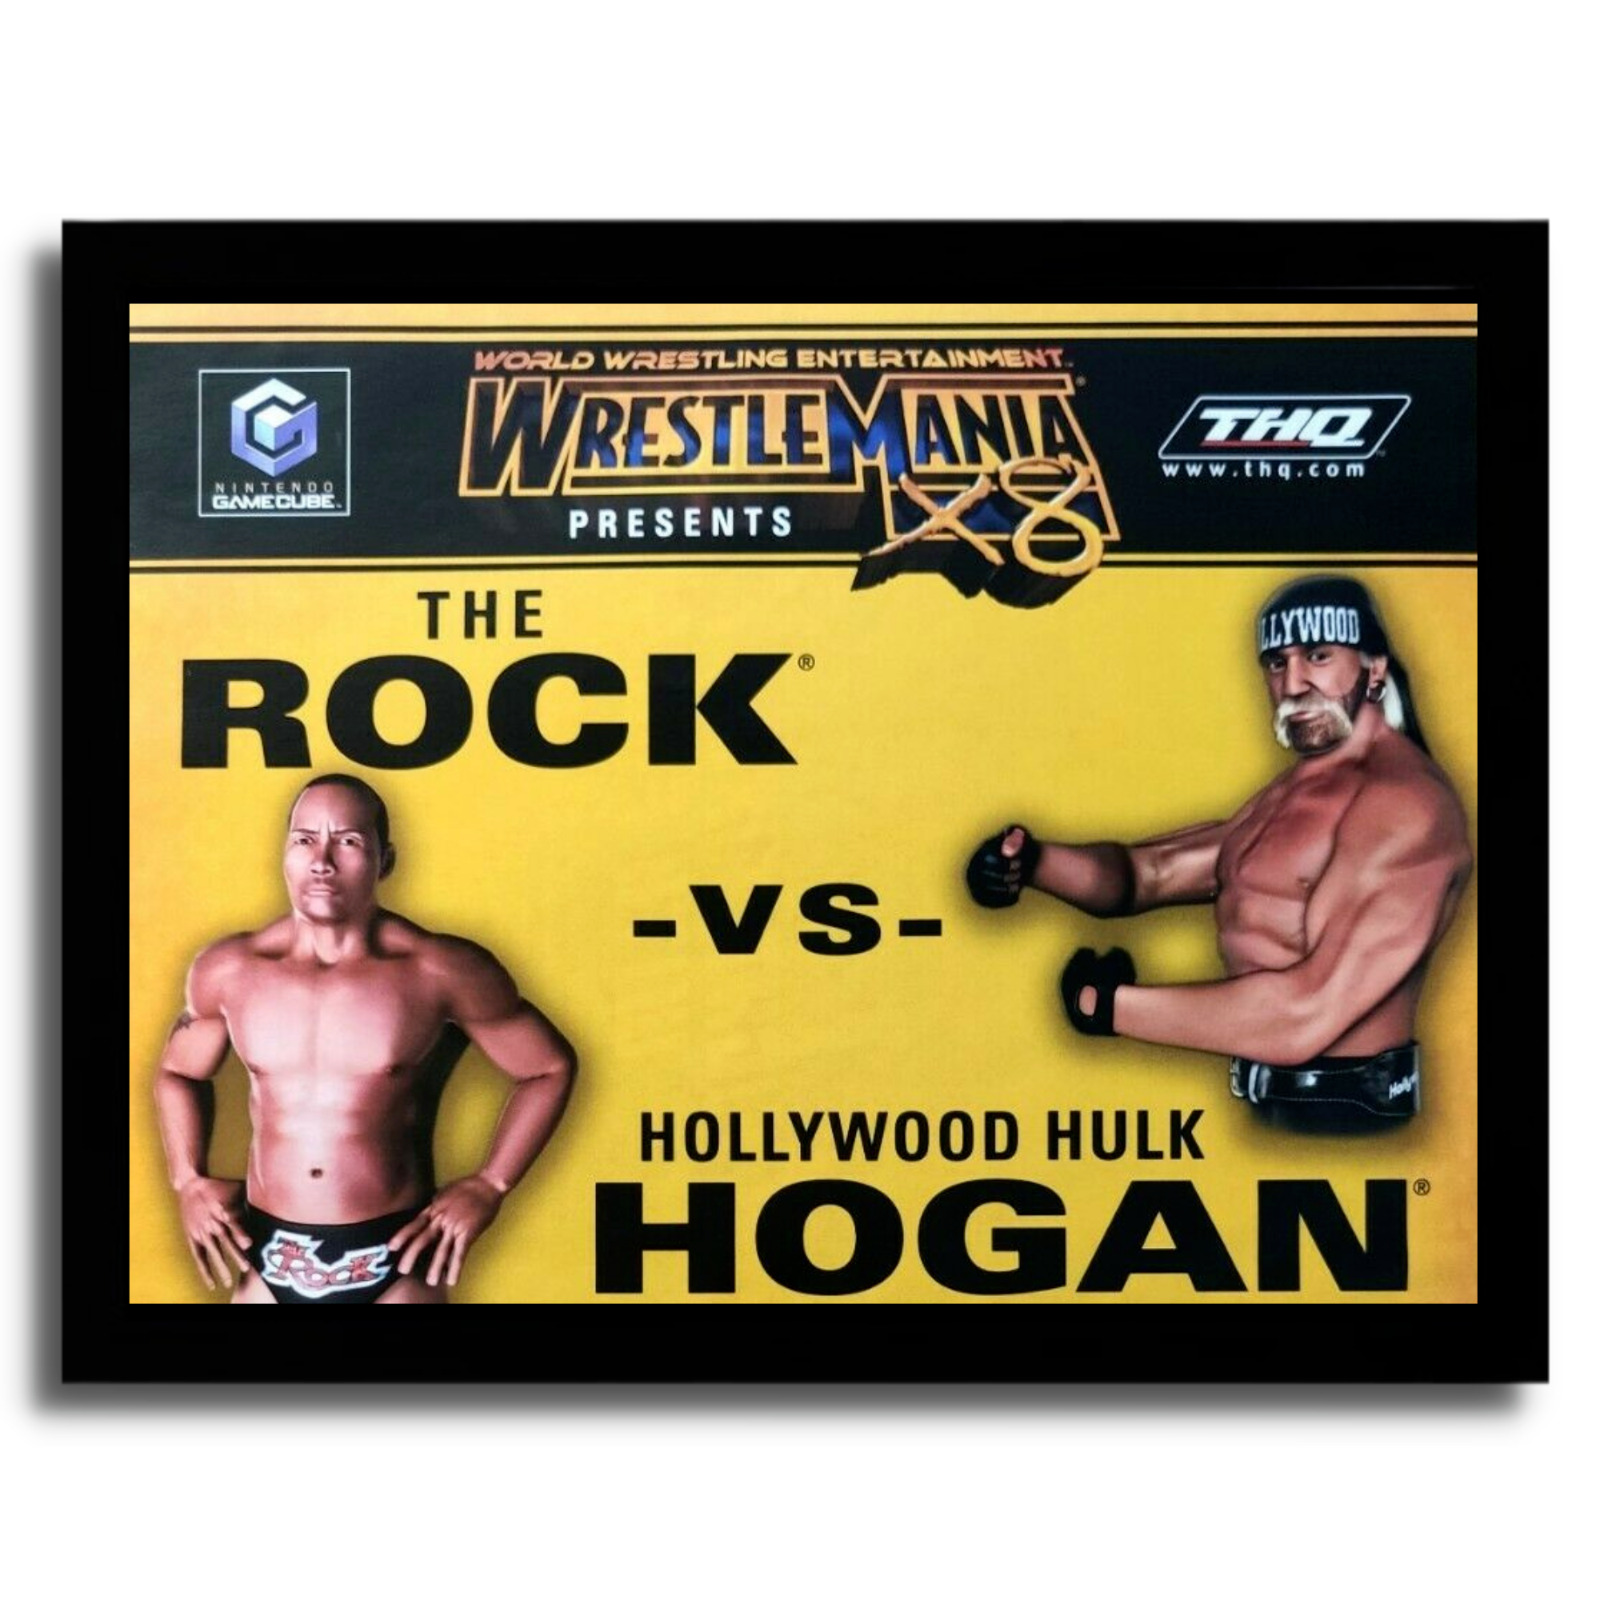 2002 WrestleMania X8 Framed Print Ad/Poster HULK HOGAN THE ROCK Official GCN WWE